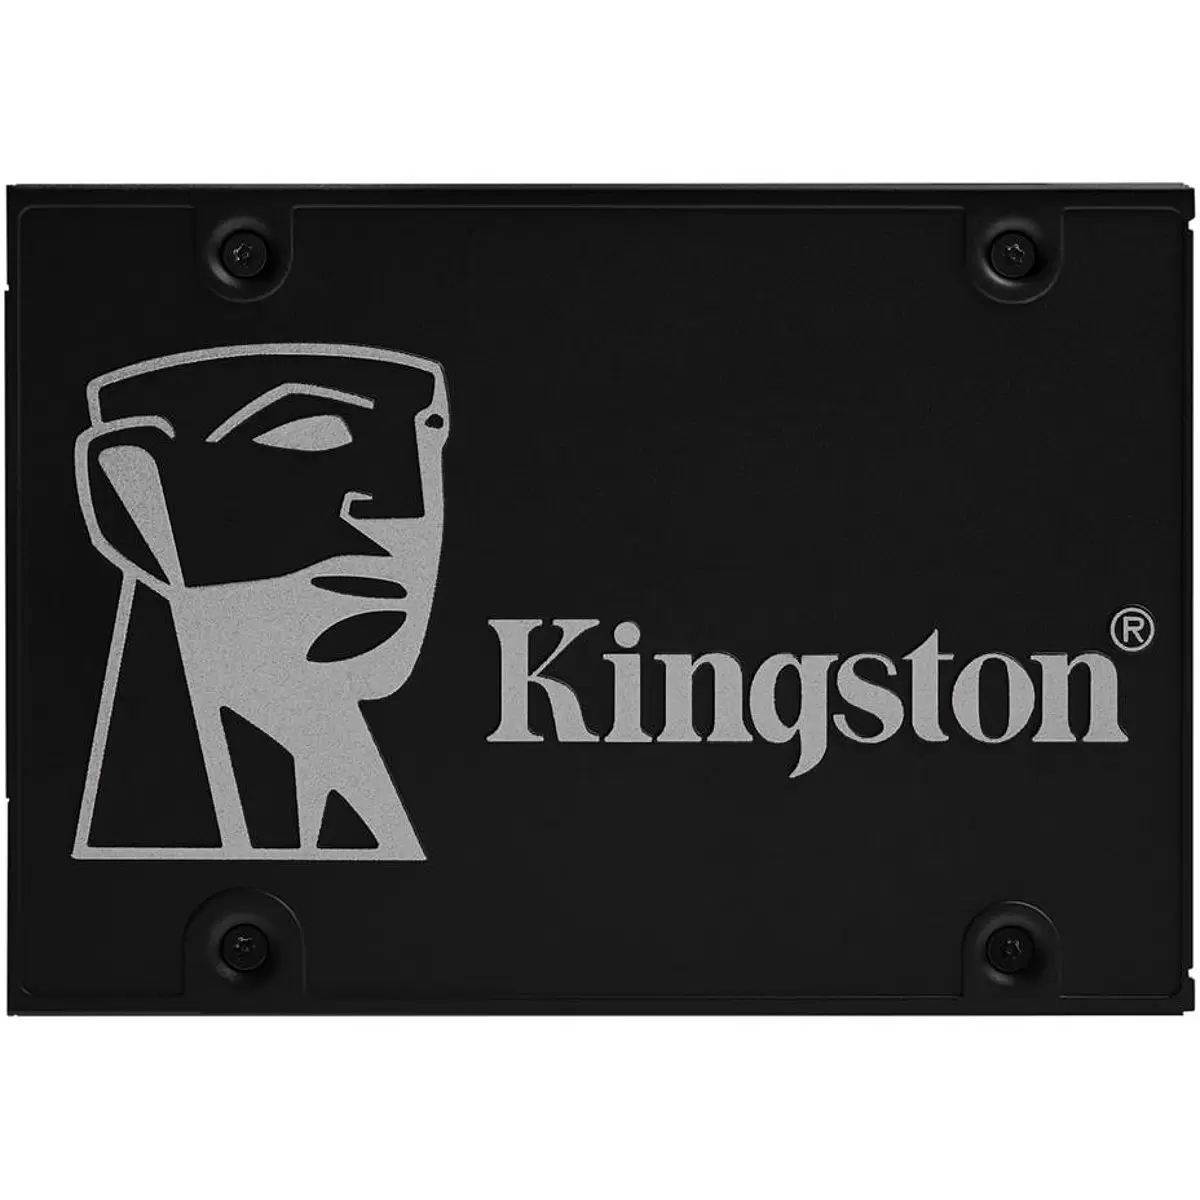 KINGSTON 512GB SSD KC600 SATA3 2 5inch